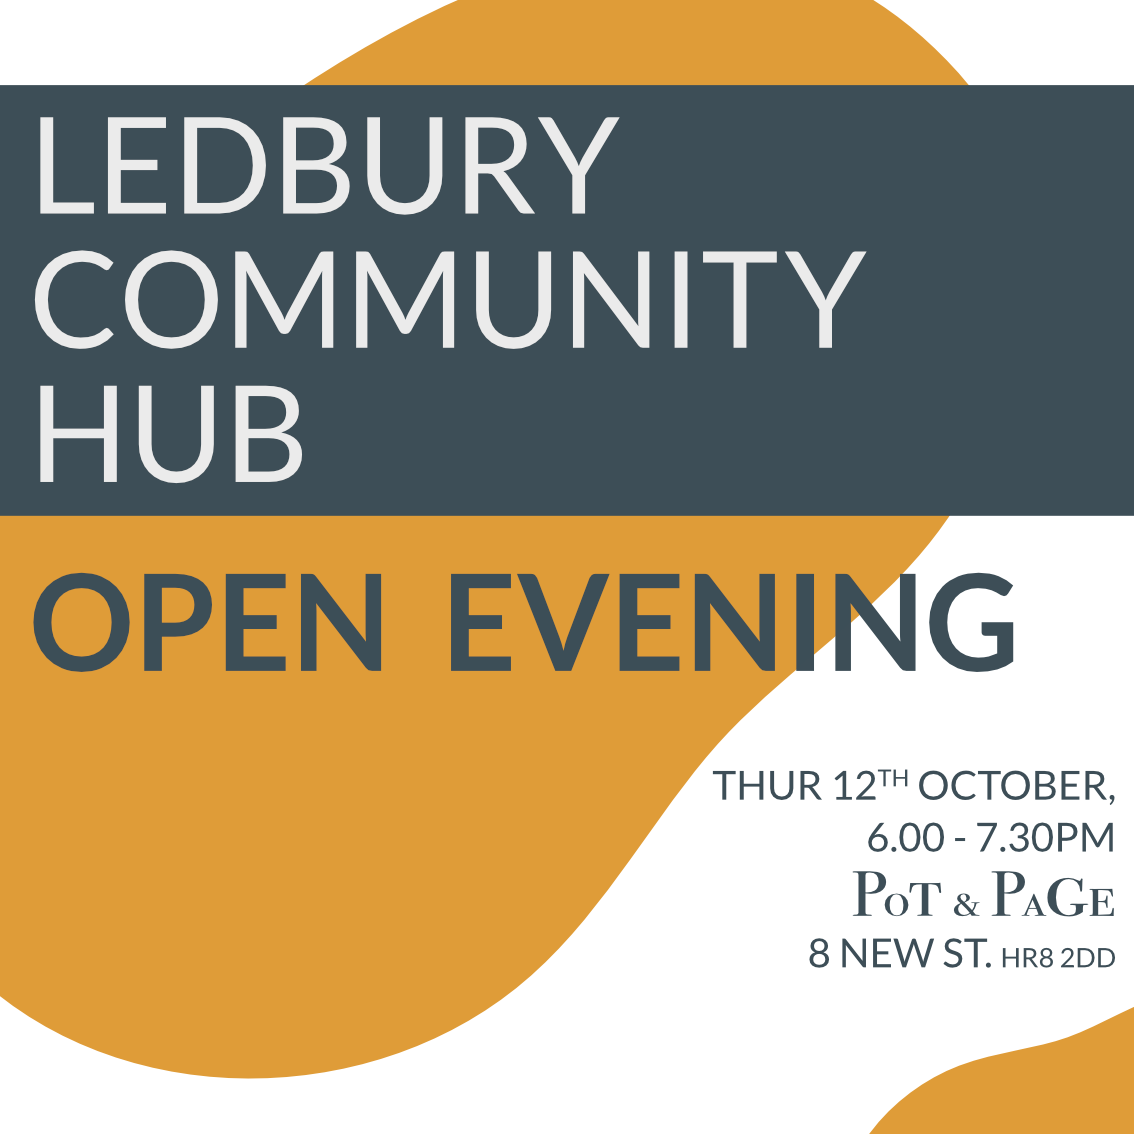 The Ledbury Community Hub Open Evening